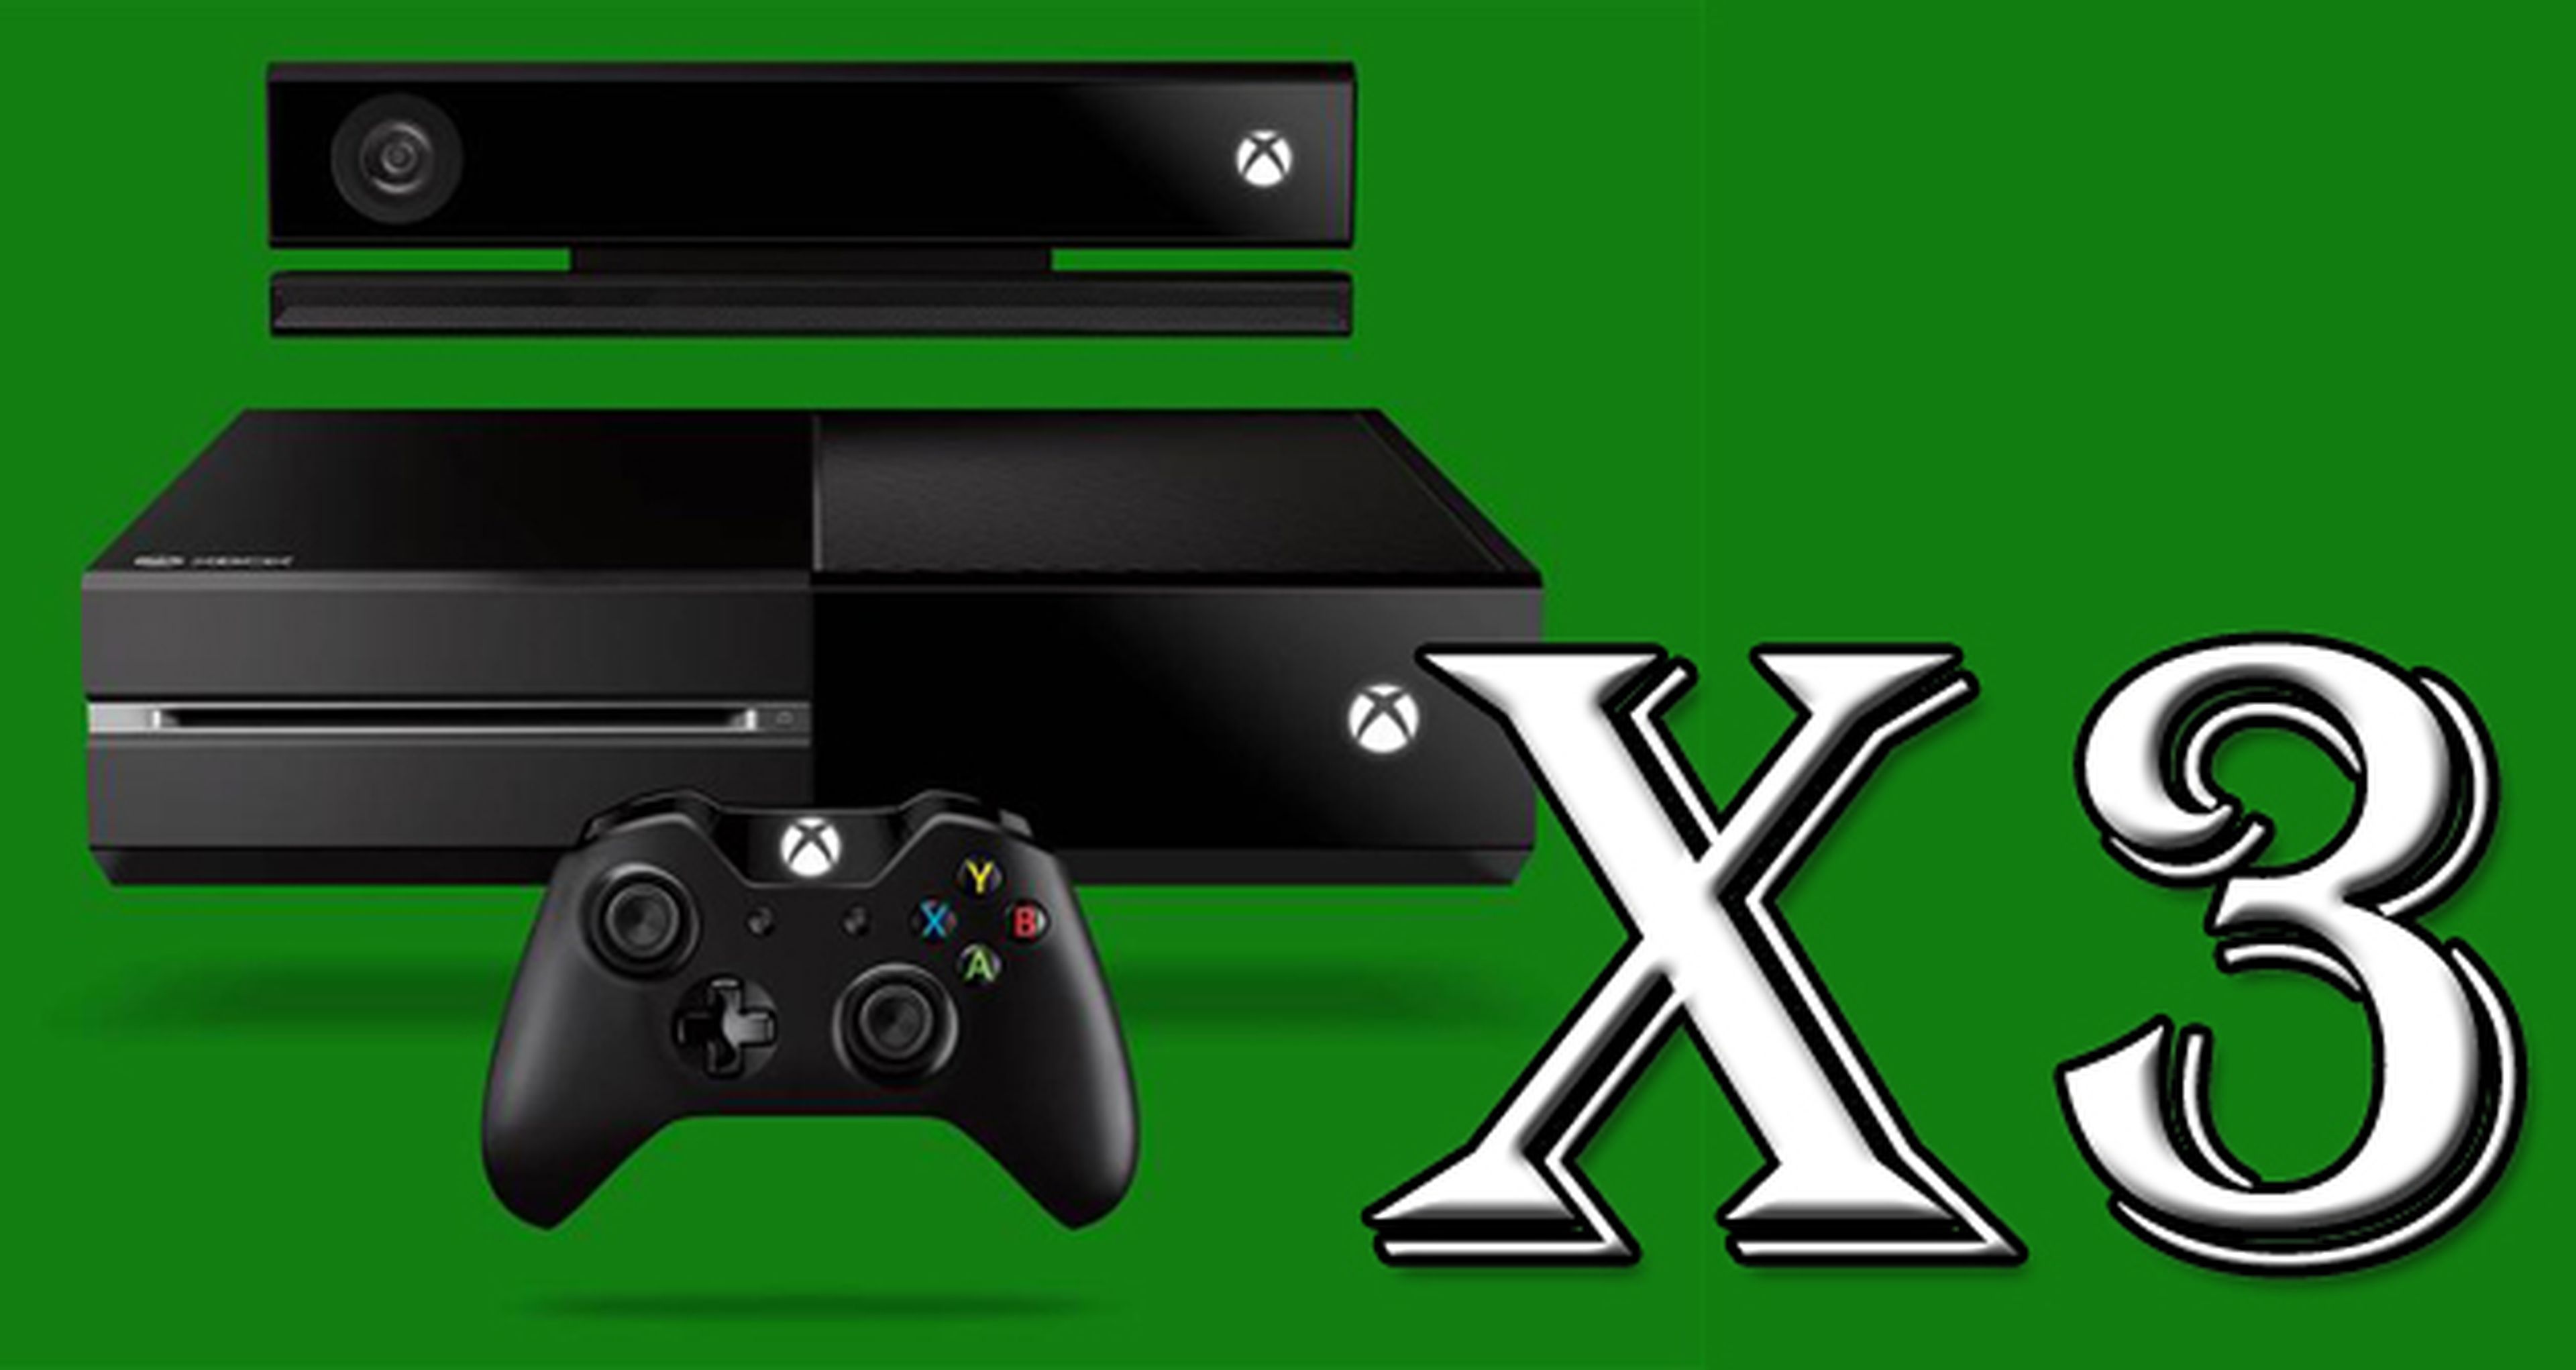 La nube de Microsoft aporta la potencia de 3 Xbox One